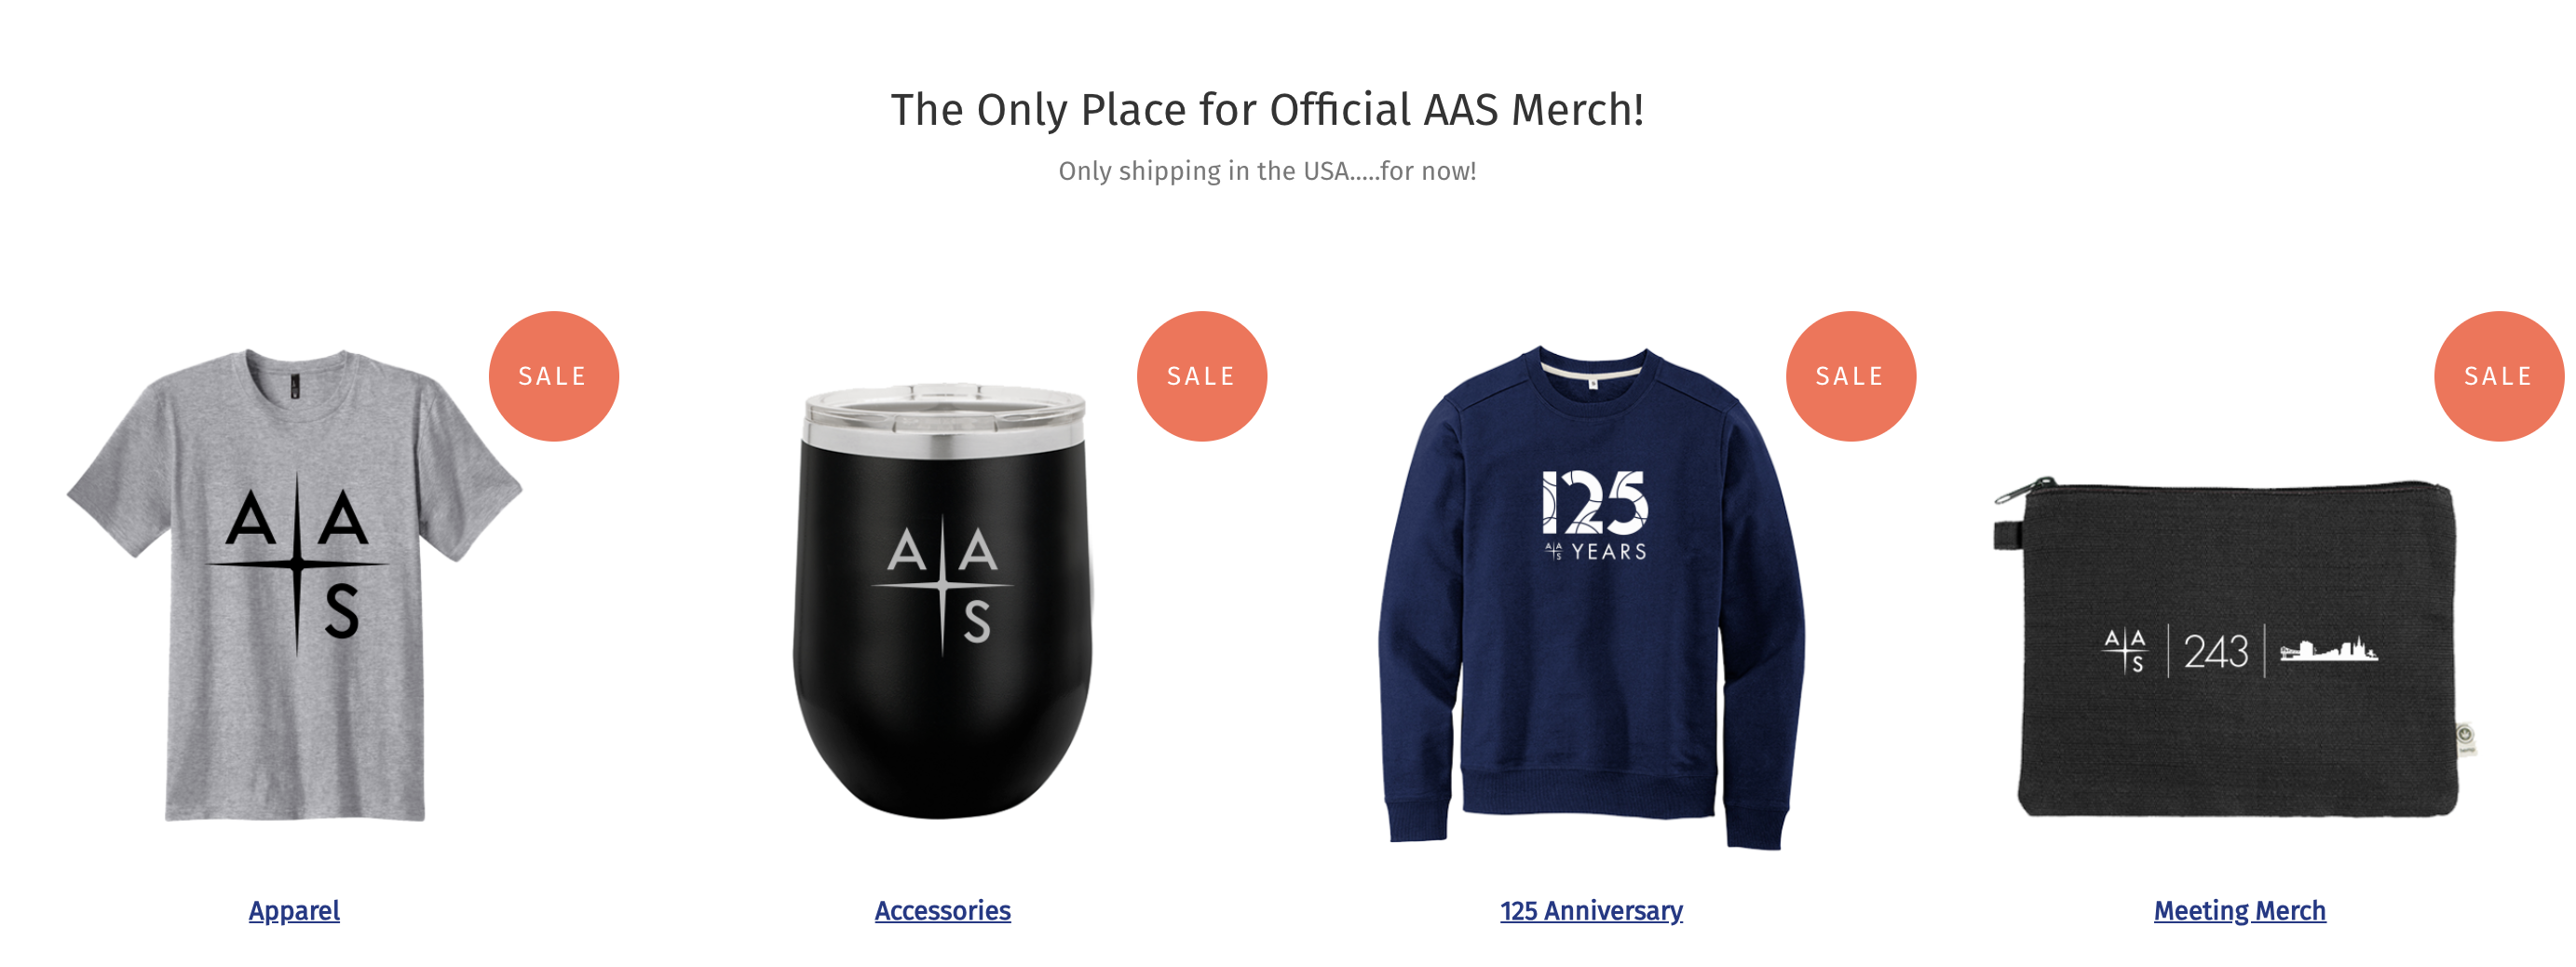 AAS online store